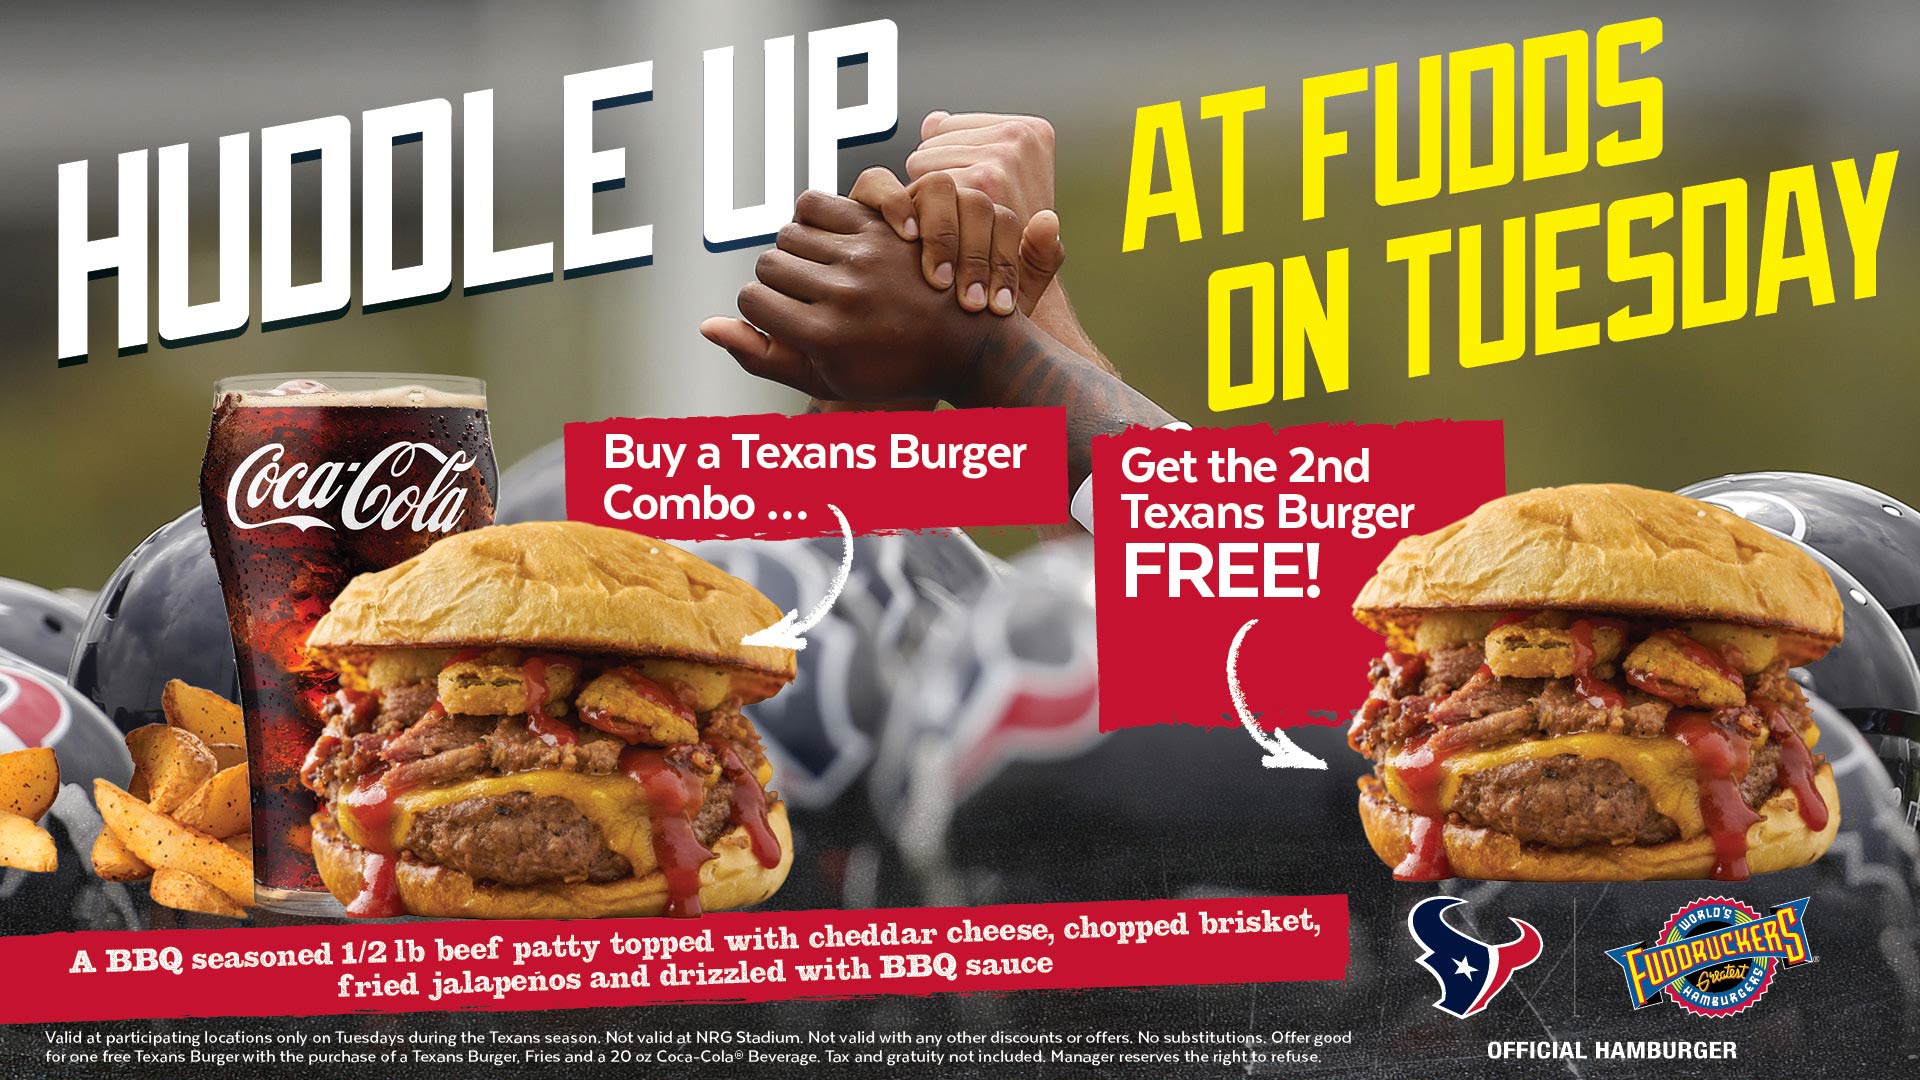 Buy a Texans Burger Combo... Get the 2nd Texans Burger FREE!